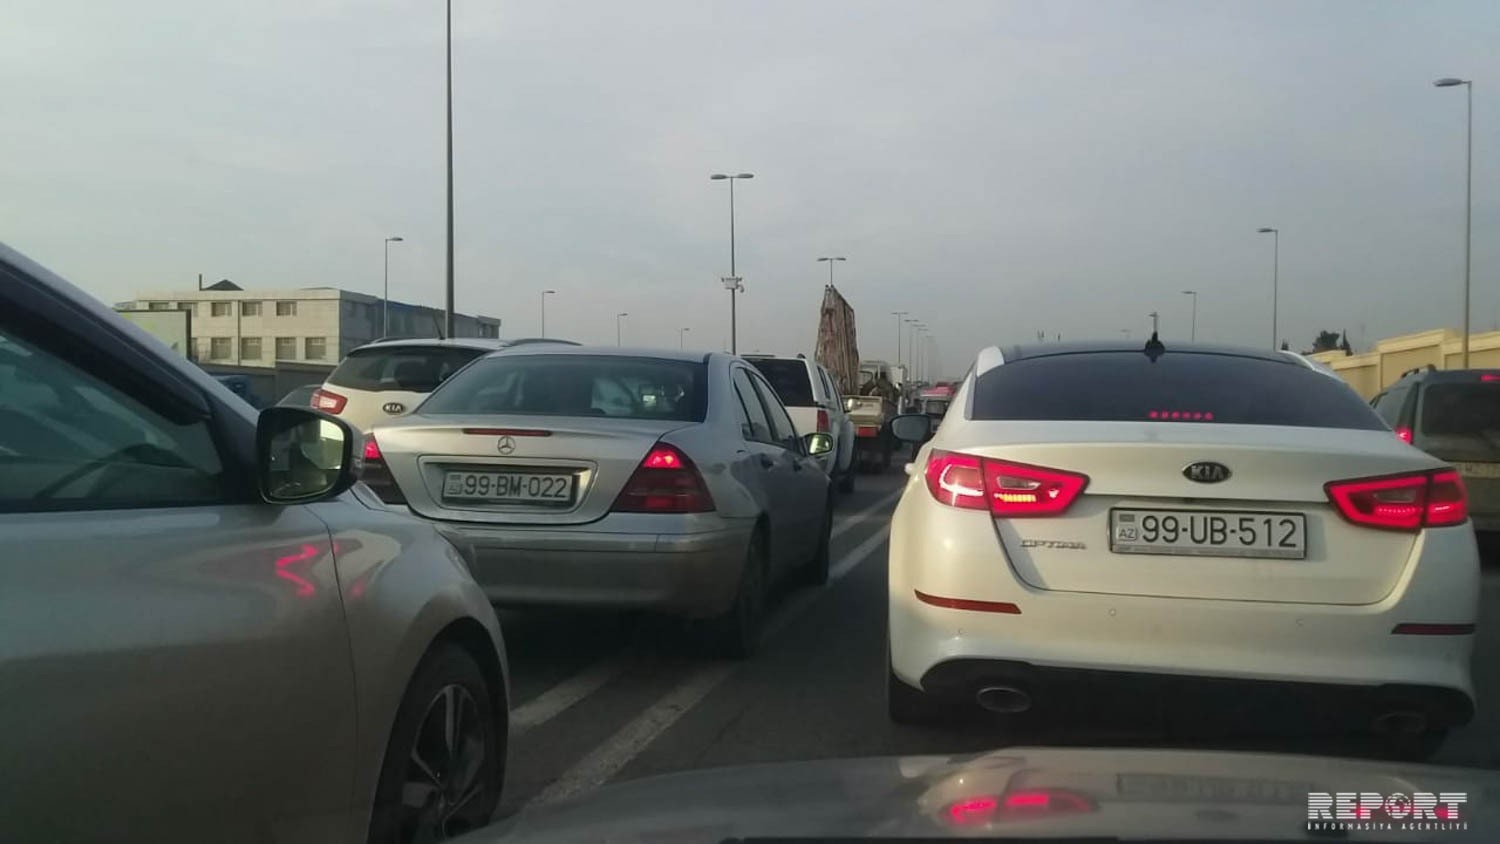 Авария на проспекте Зии Буньядова в Баку привела к пробке - ФОТО